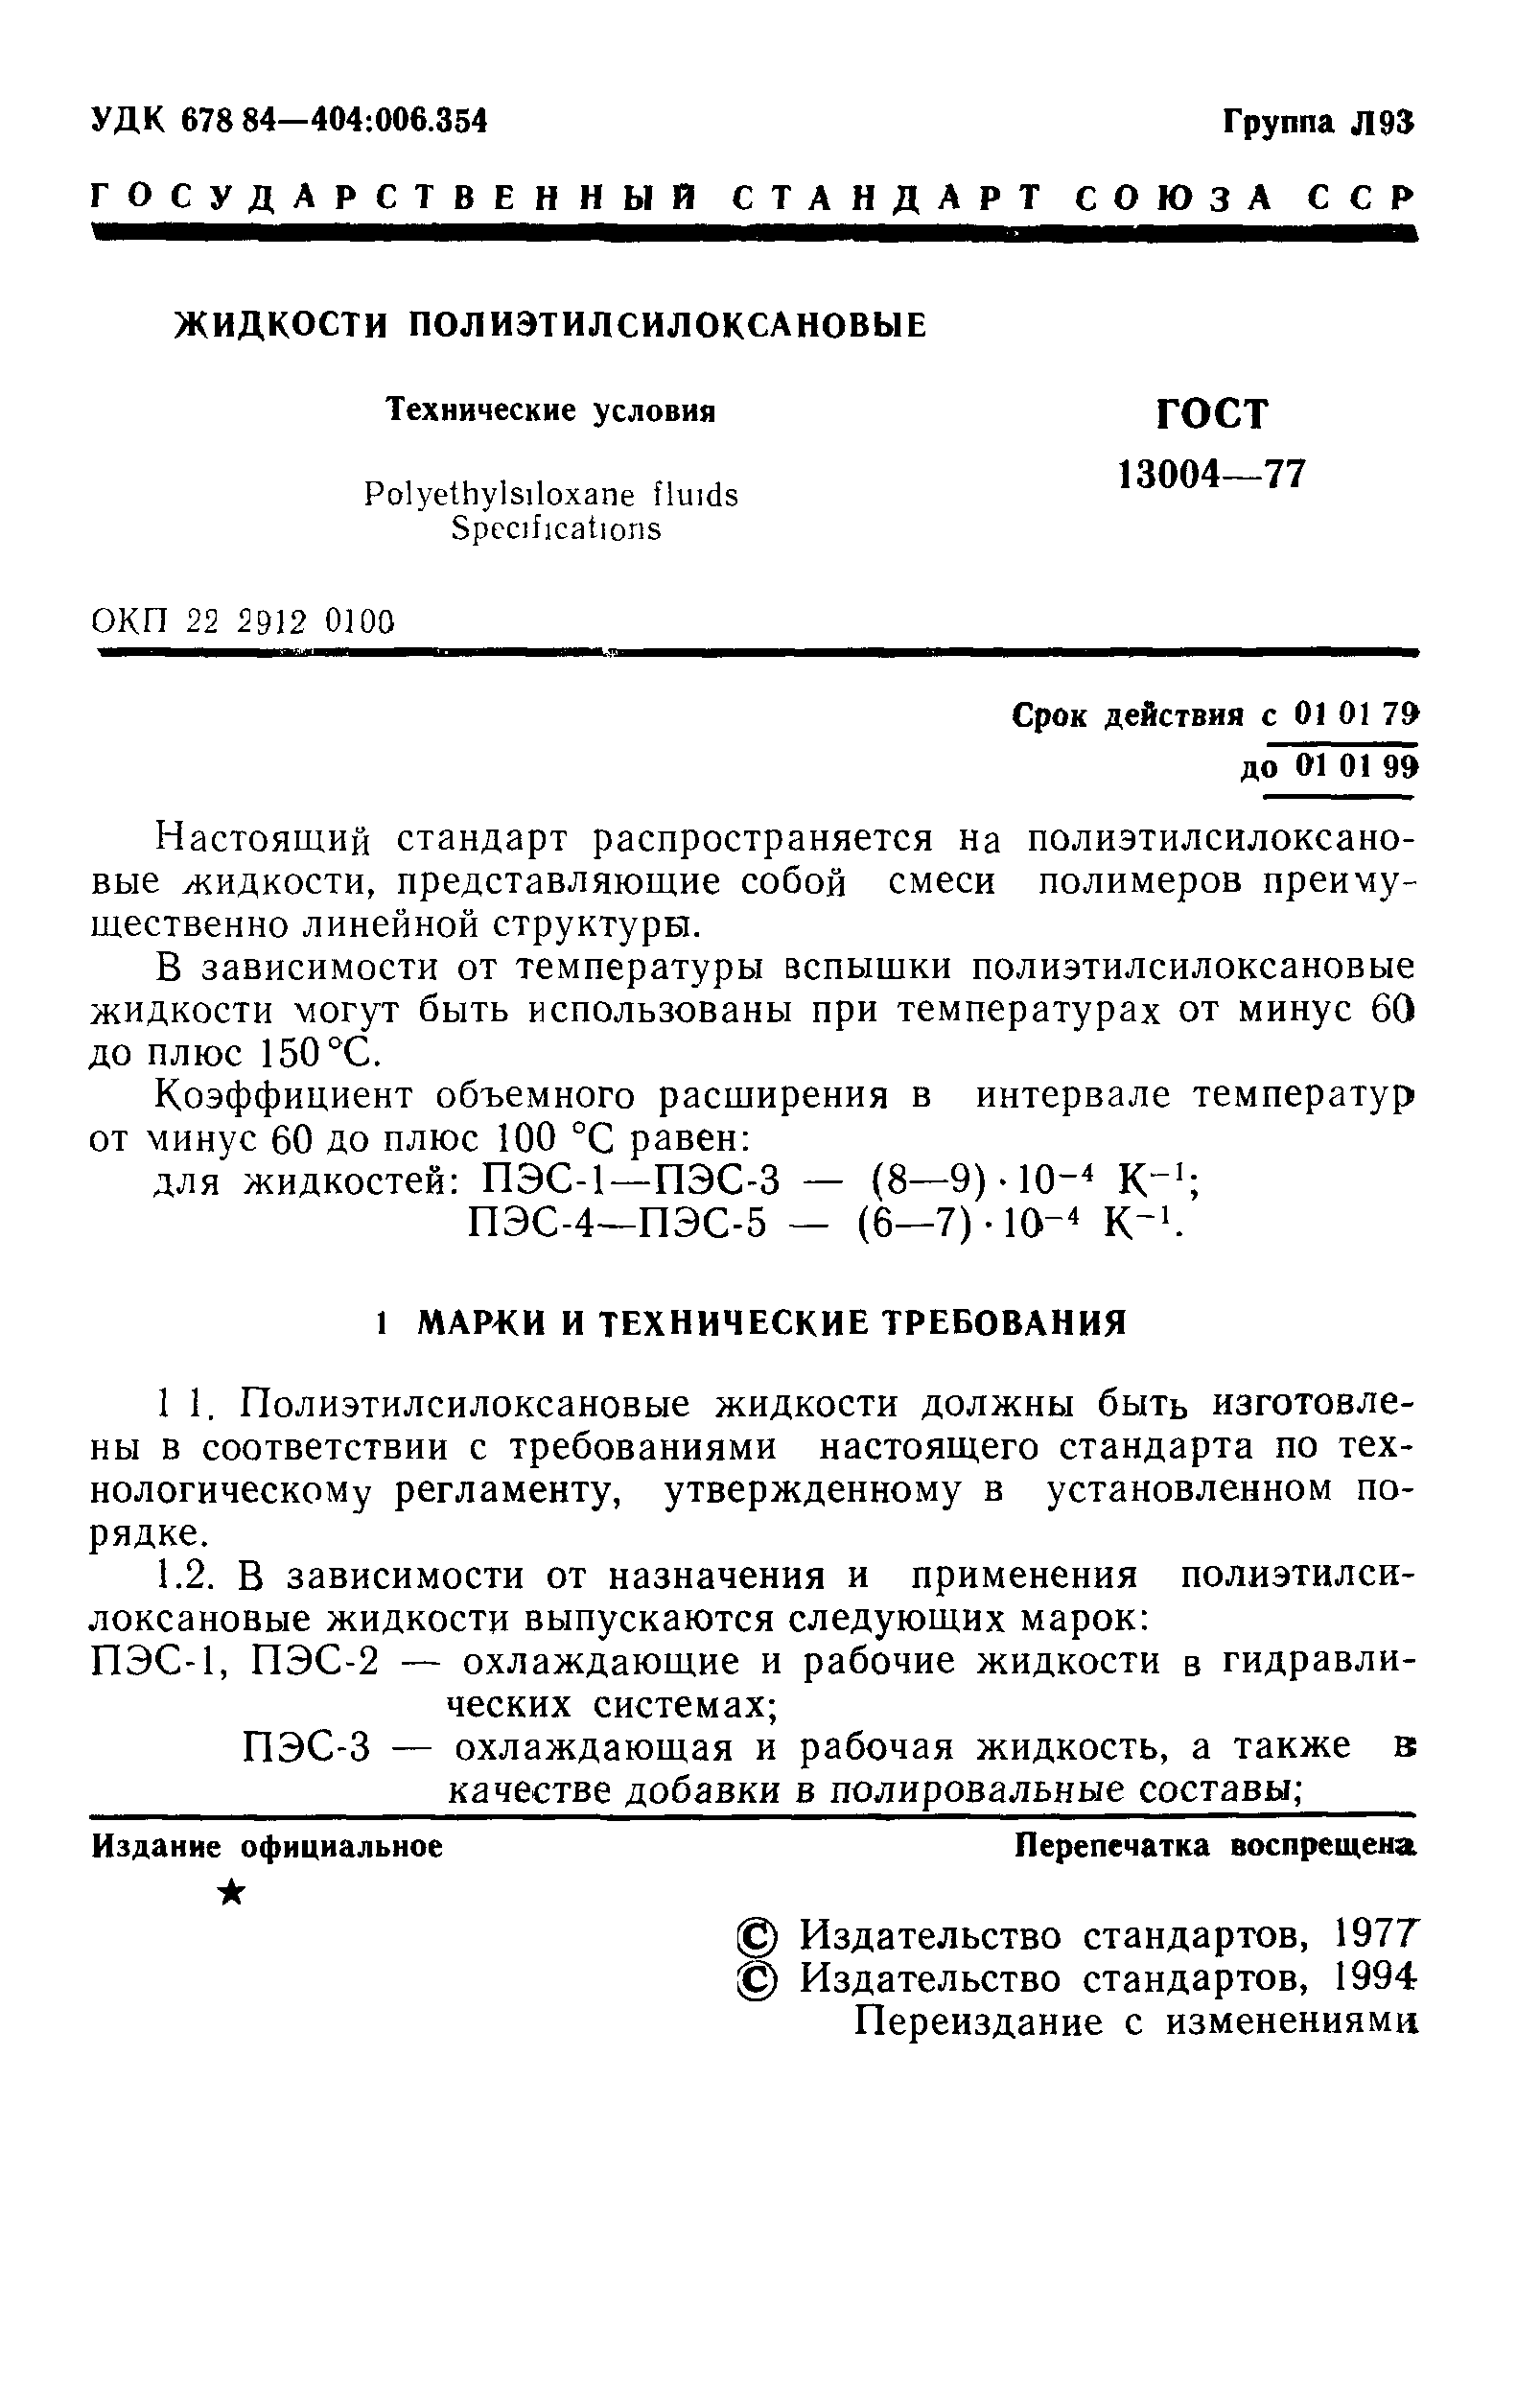 ГОСТ 13004-77